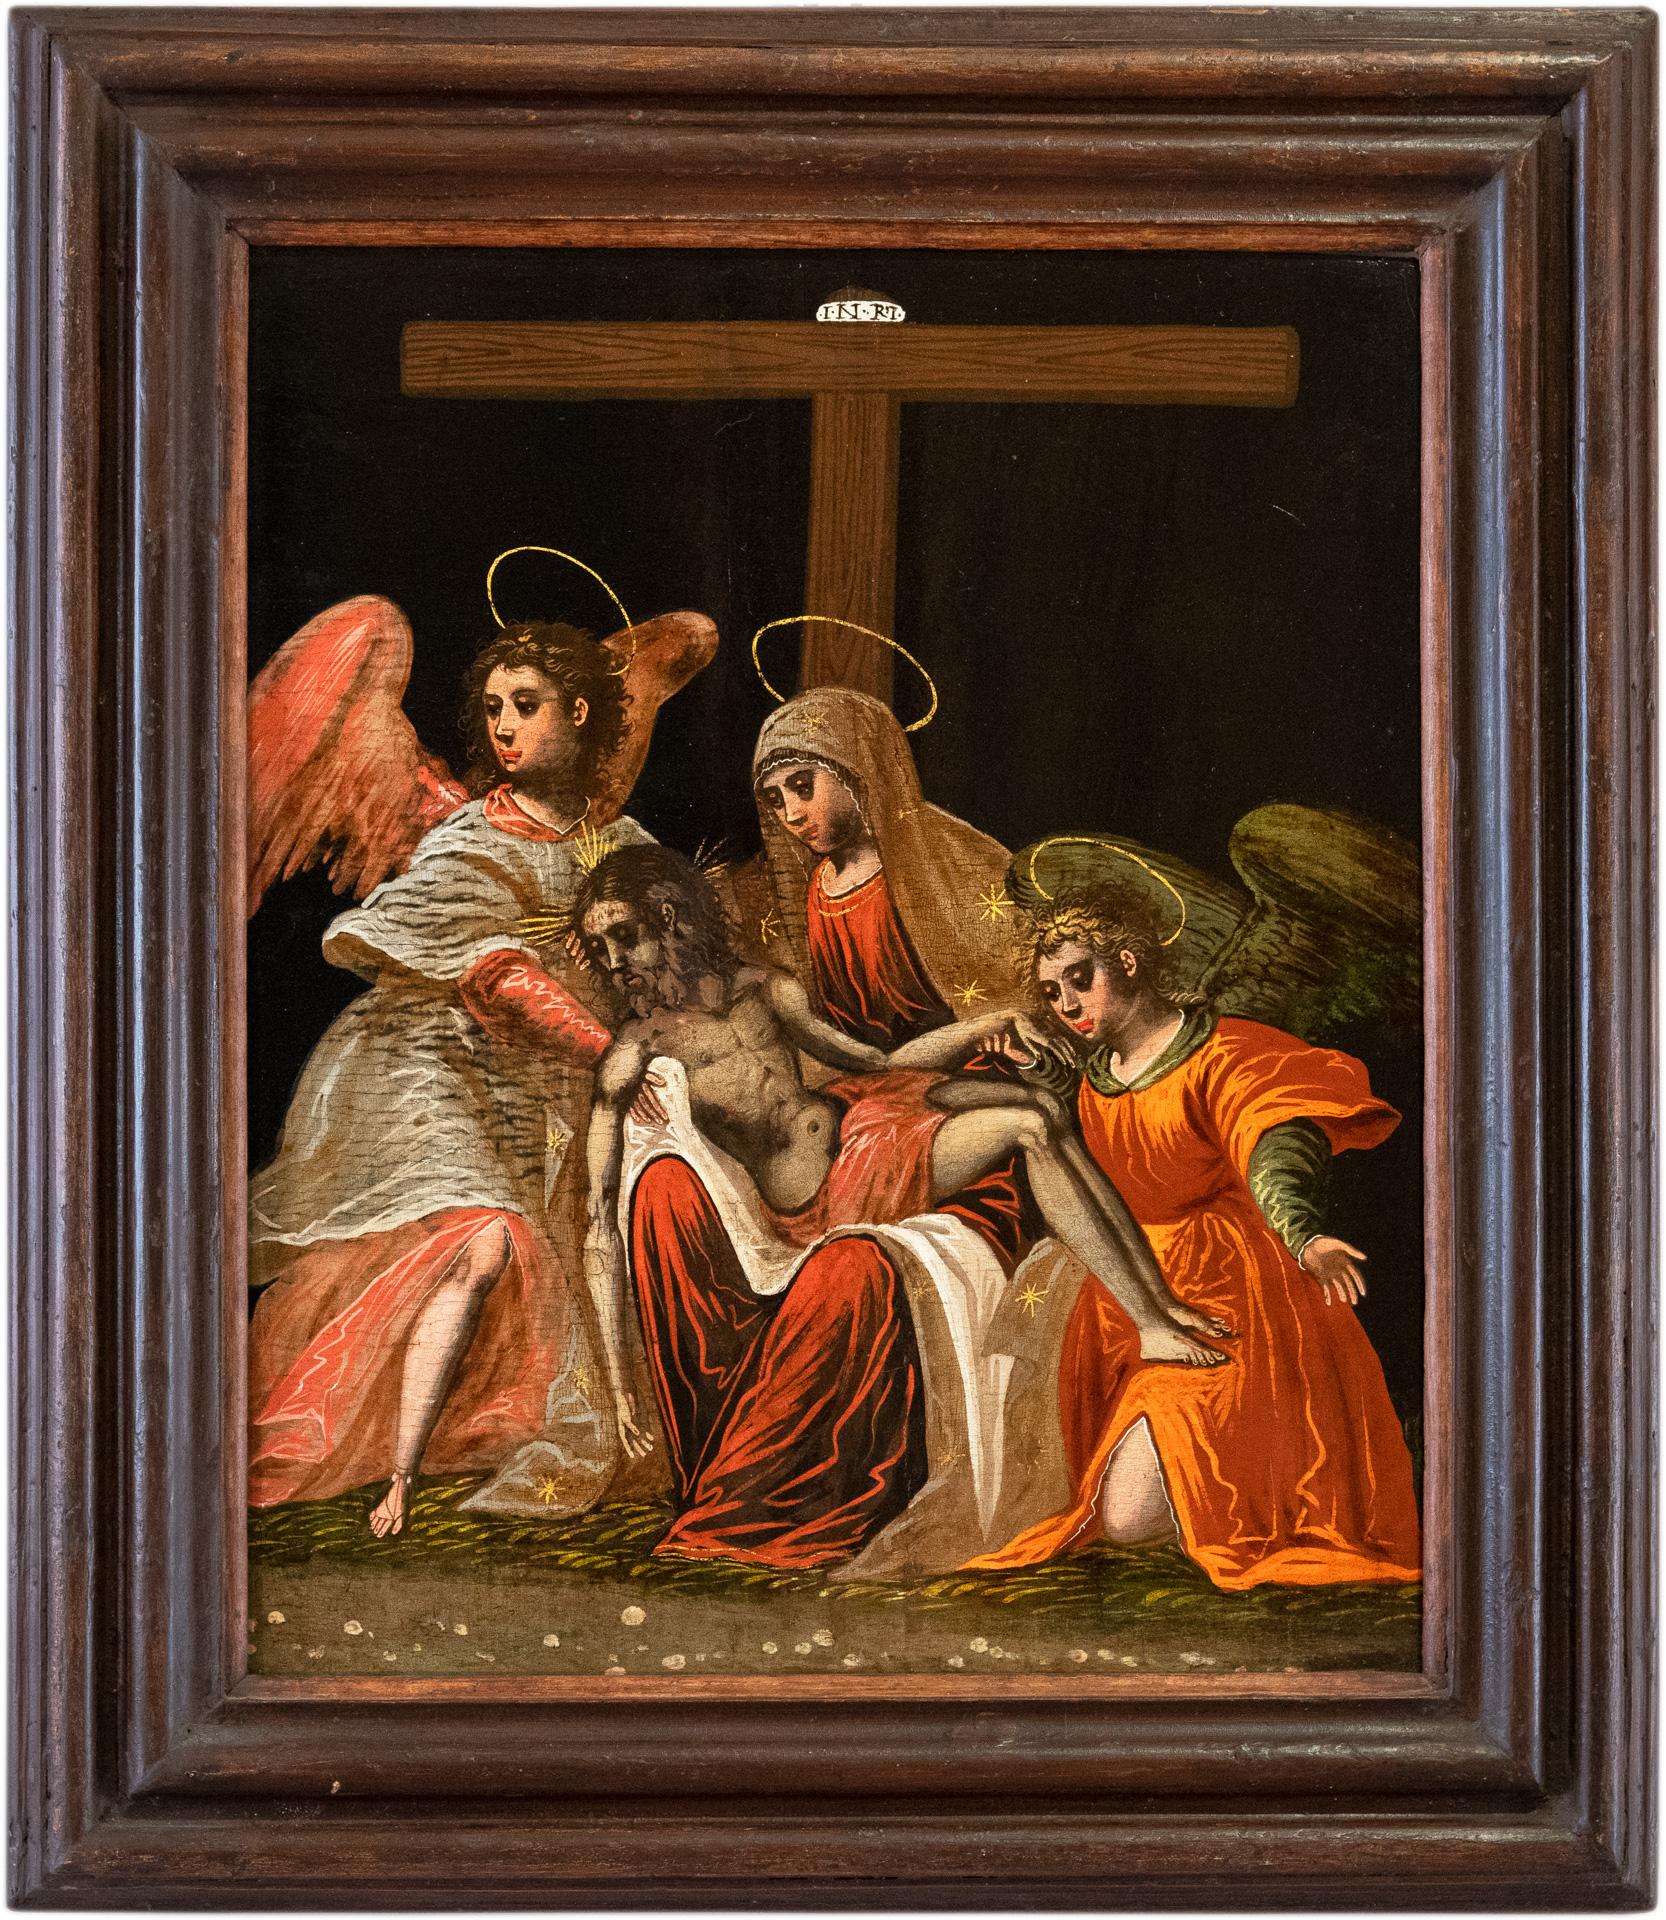 Unknown Interior Painting - 16-17th century Venetian - Cretan figure painting - Christ cross - Oil on panel